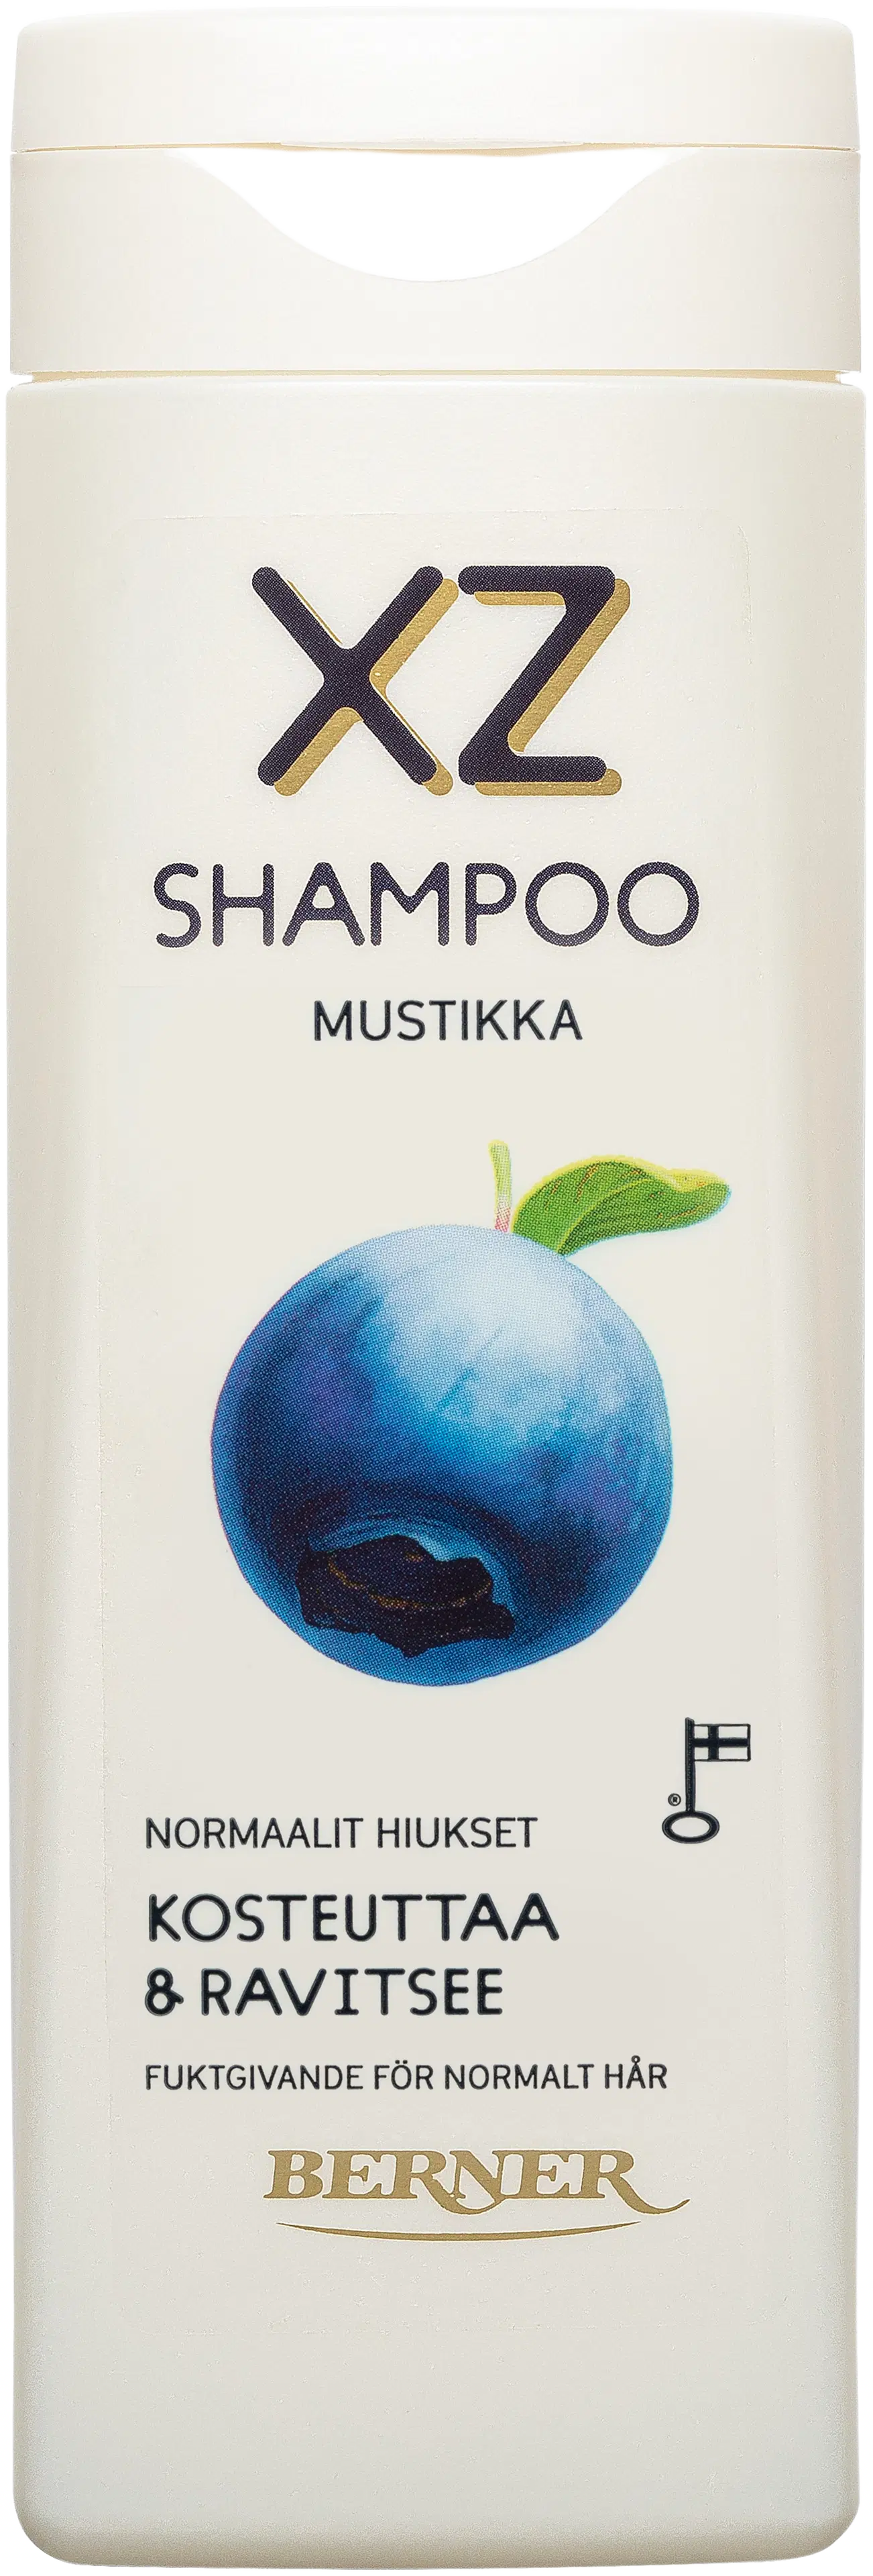 XZ 250ml Mustikka shampoo